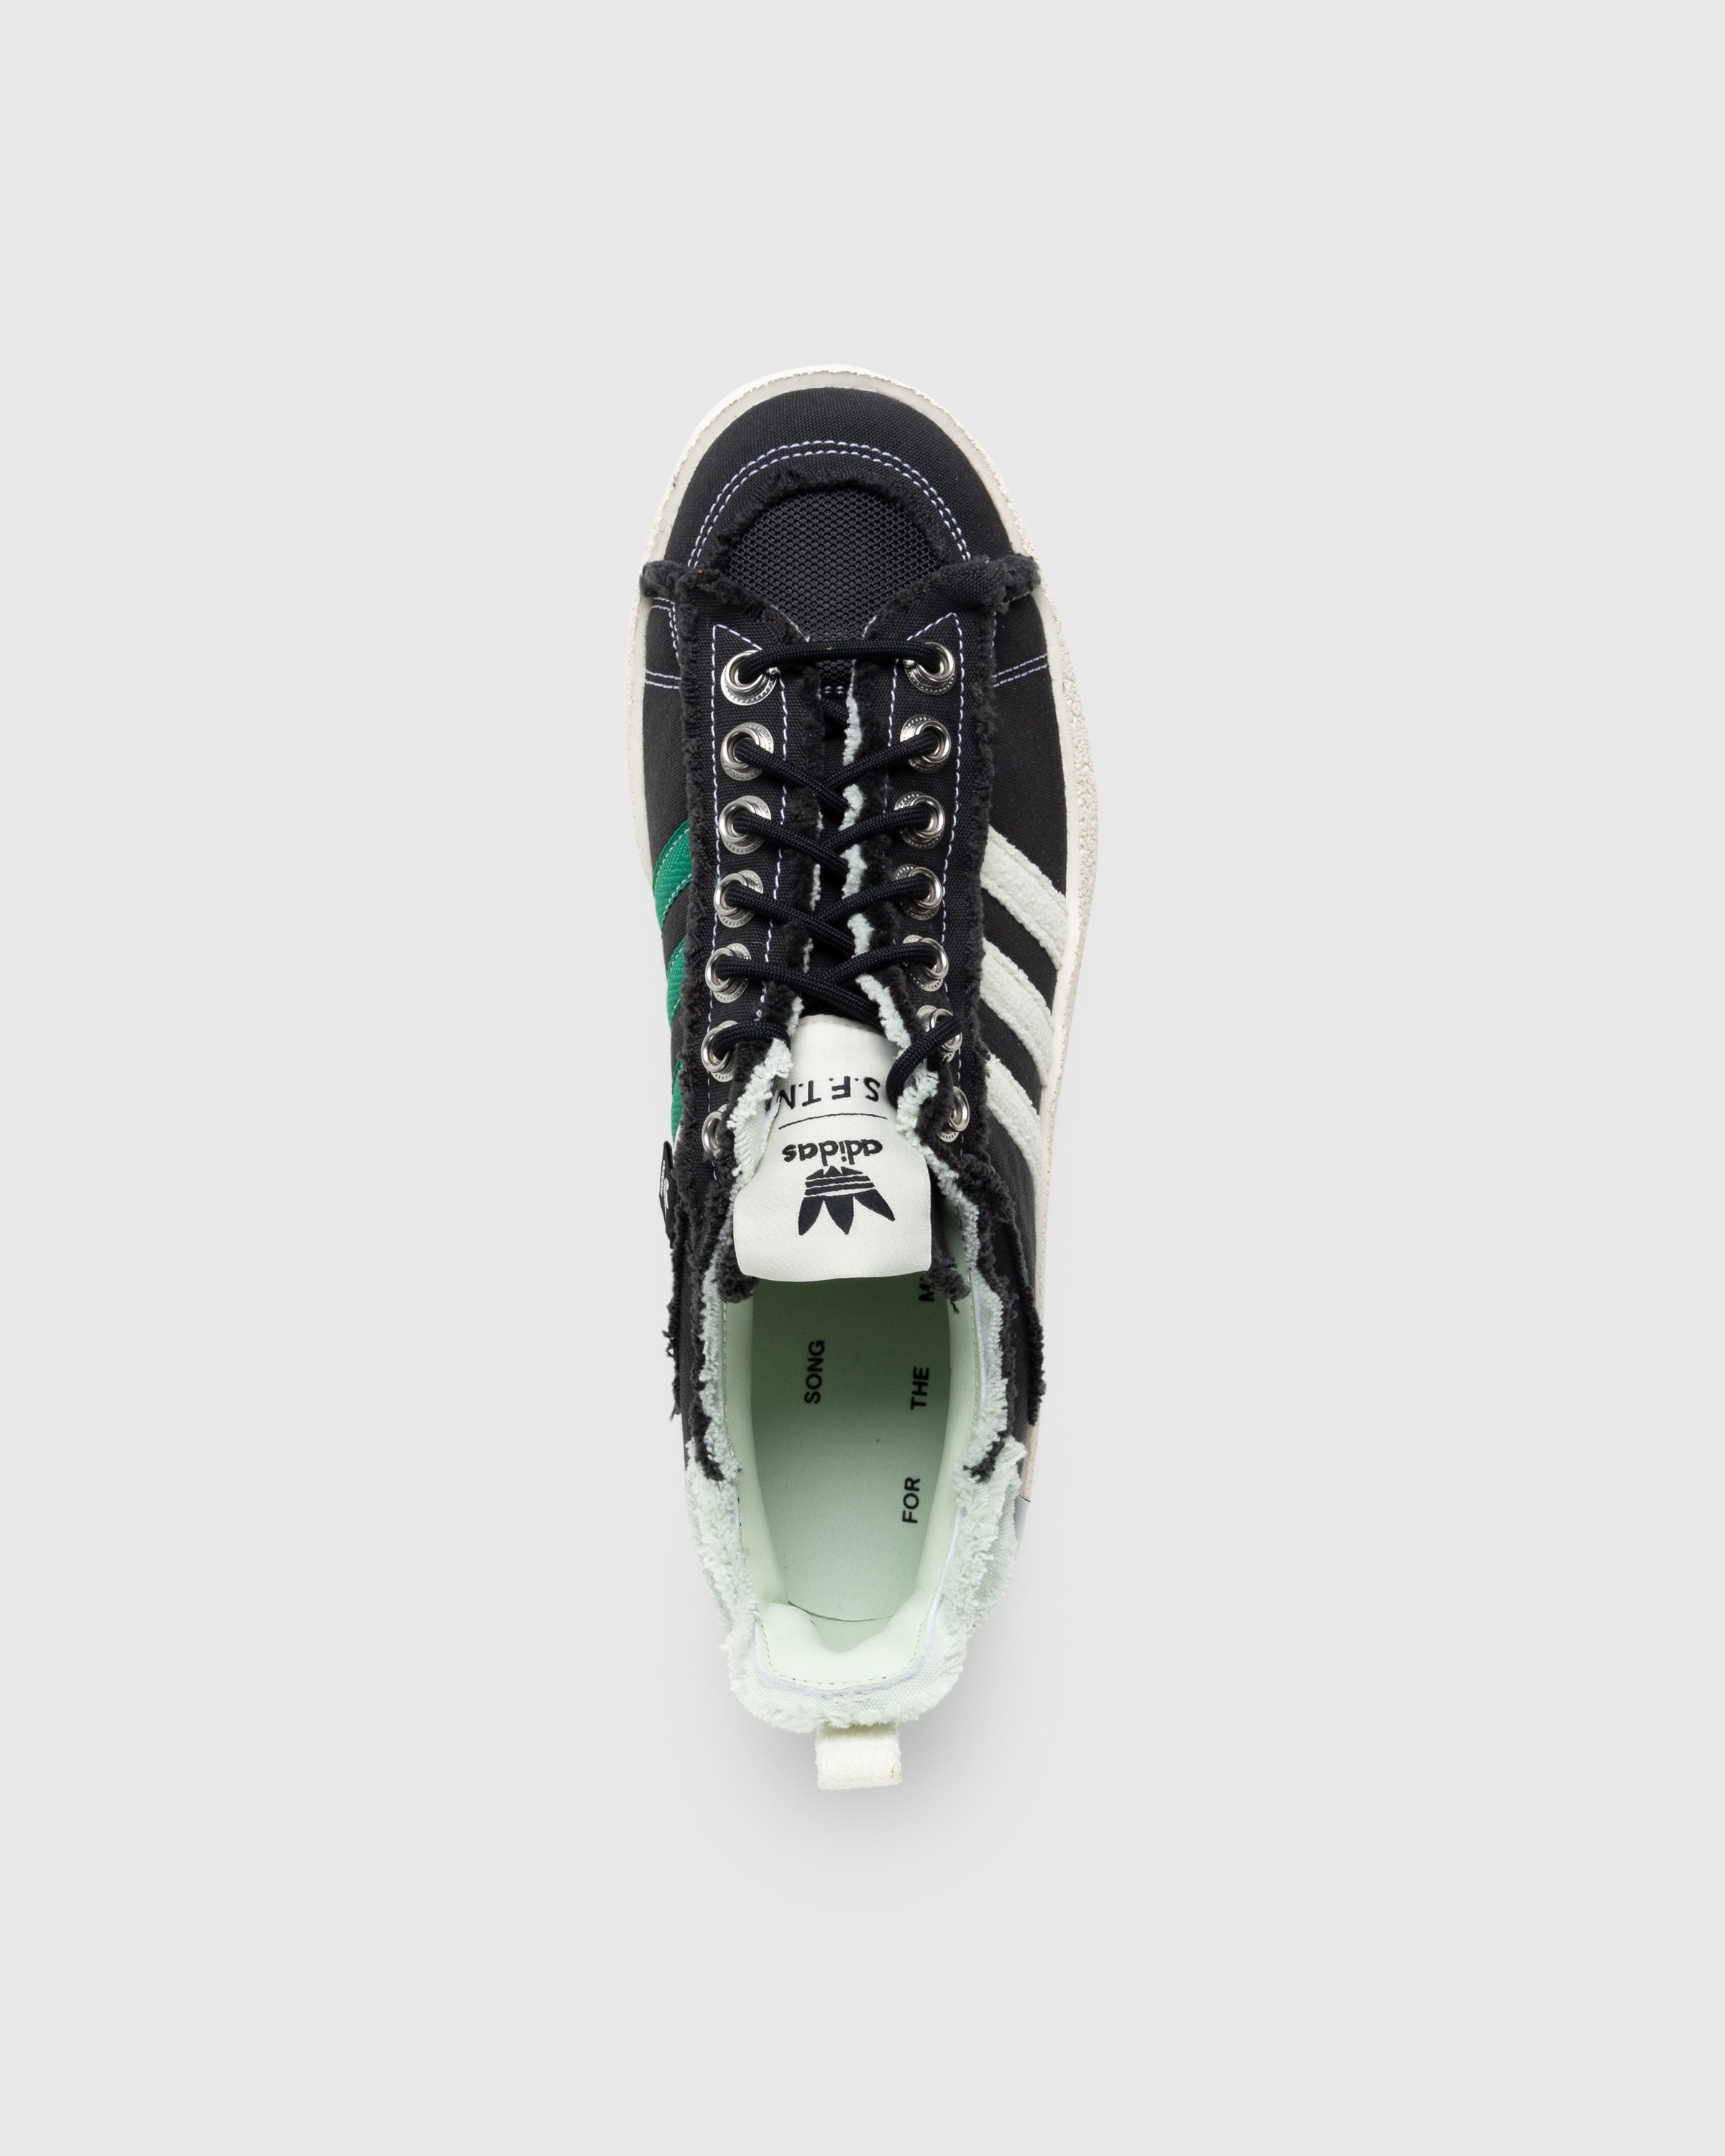 Adidas - CAMPUS 80s CBLACK/CWHITE/LINGRN - Footwear - Black - Image 5